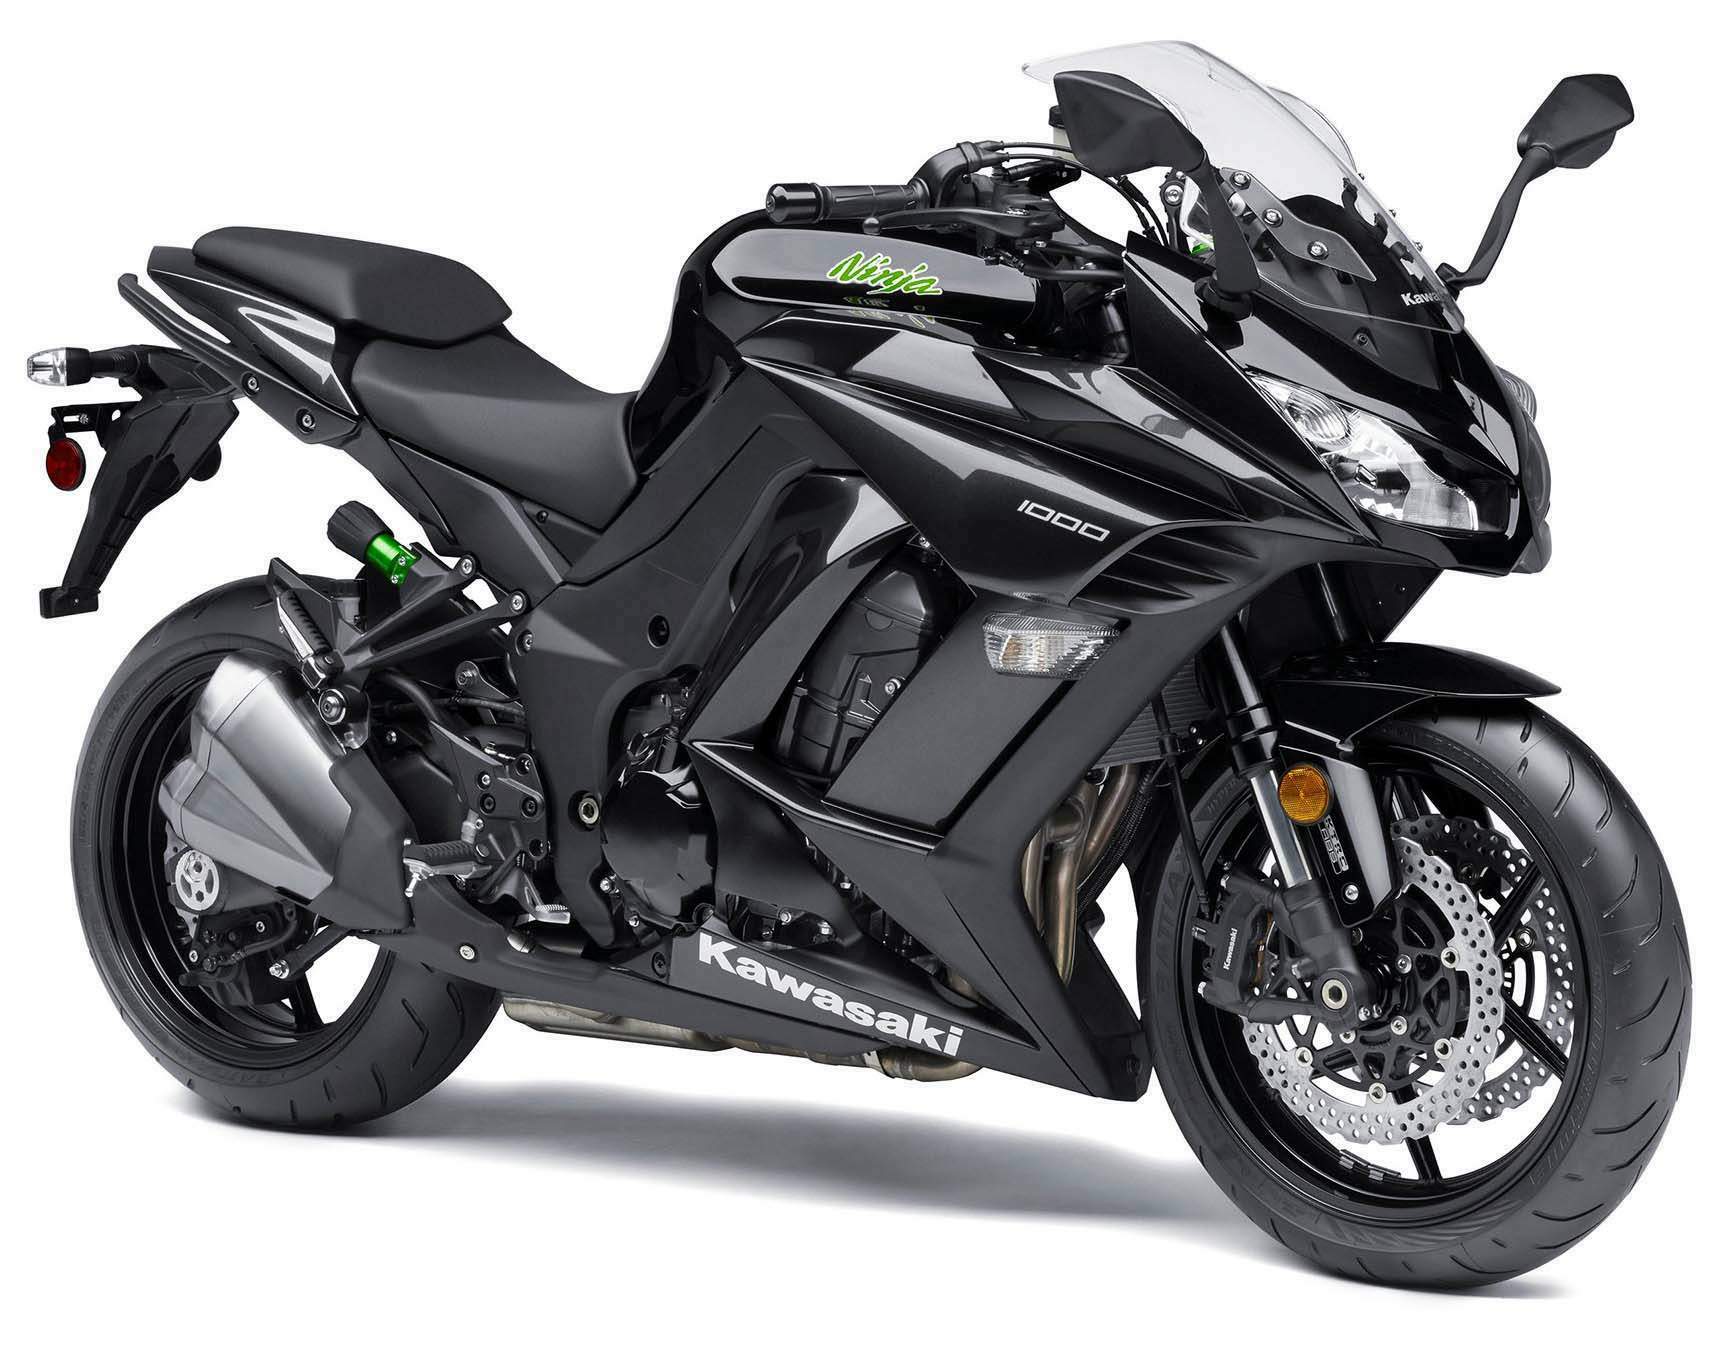 Kawasaki Ninja 1000 technical specifications